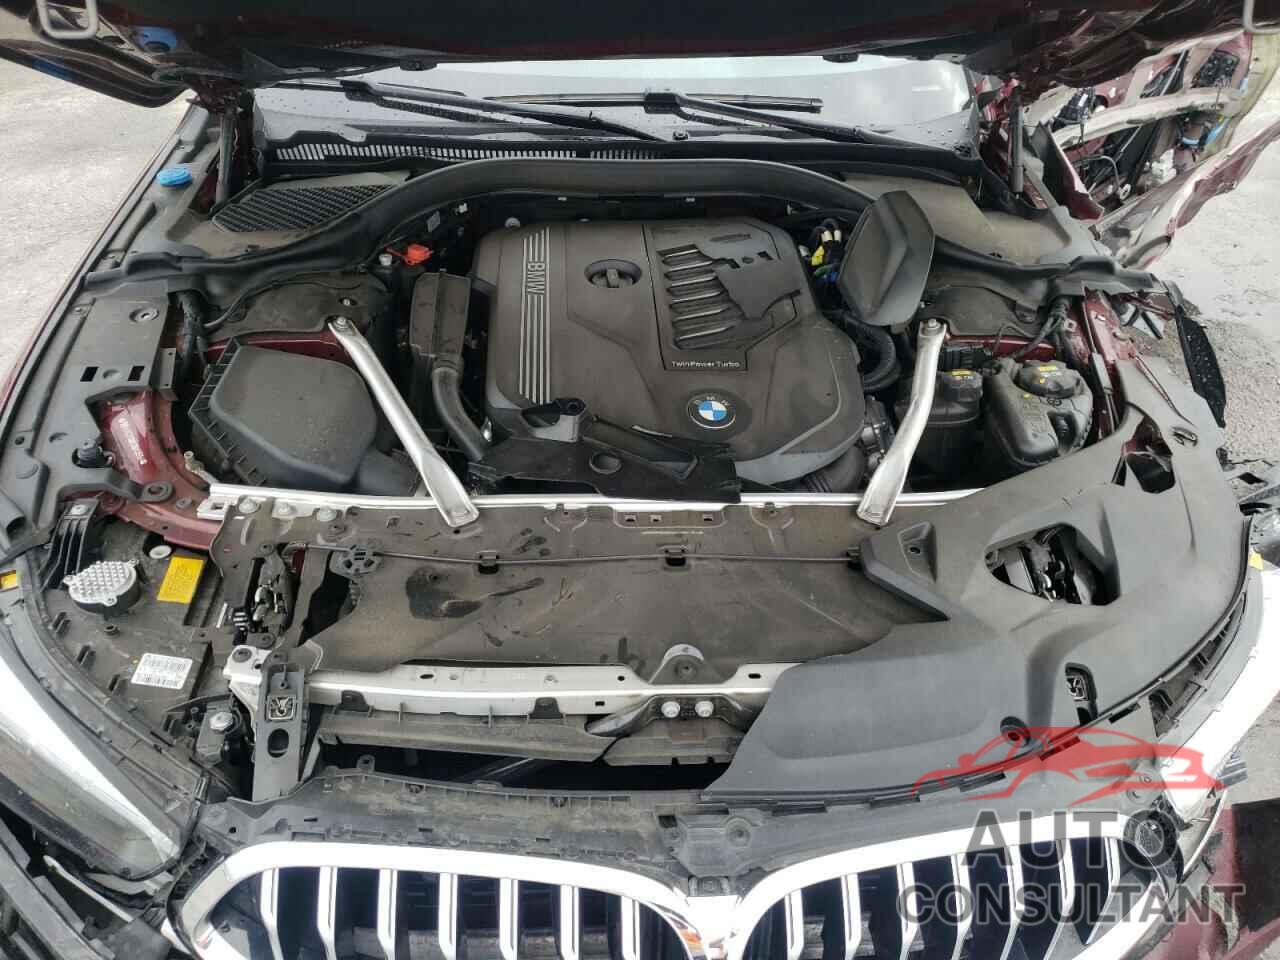 BMW 8 SERIES 2020 - WBAAE2C02LCD13664